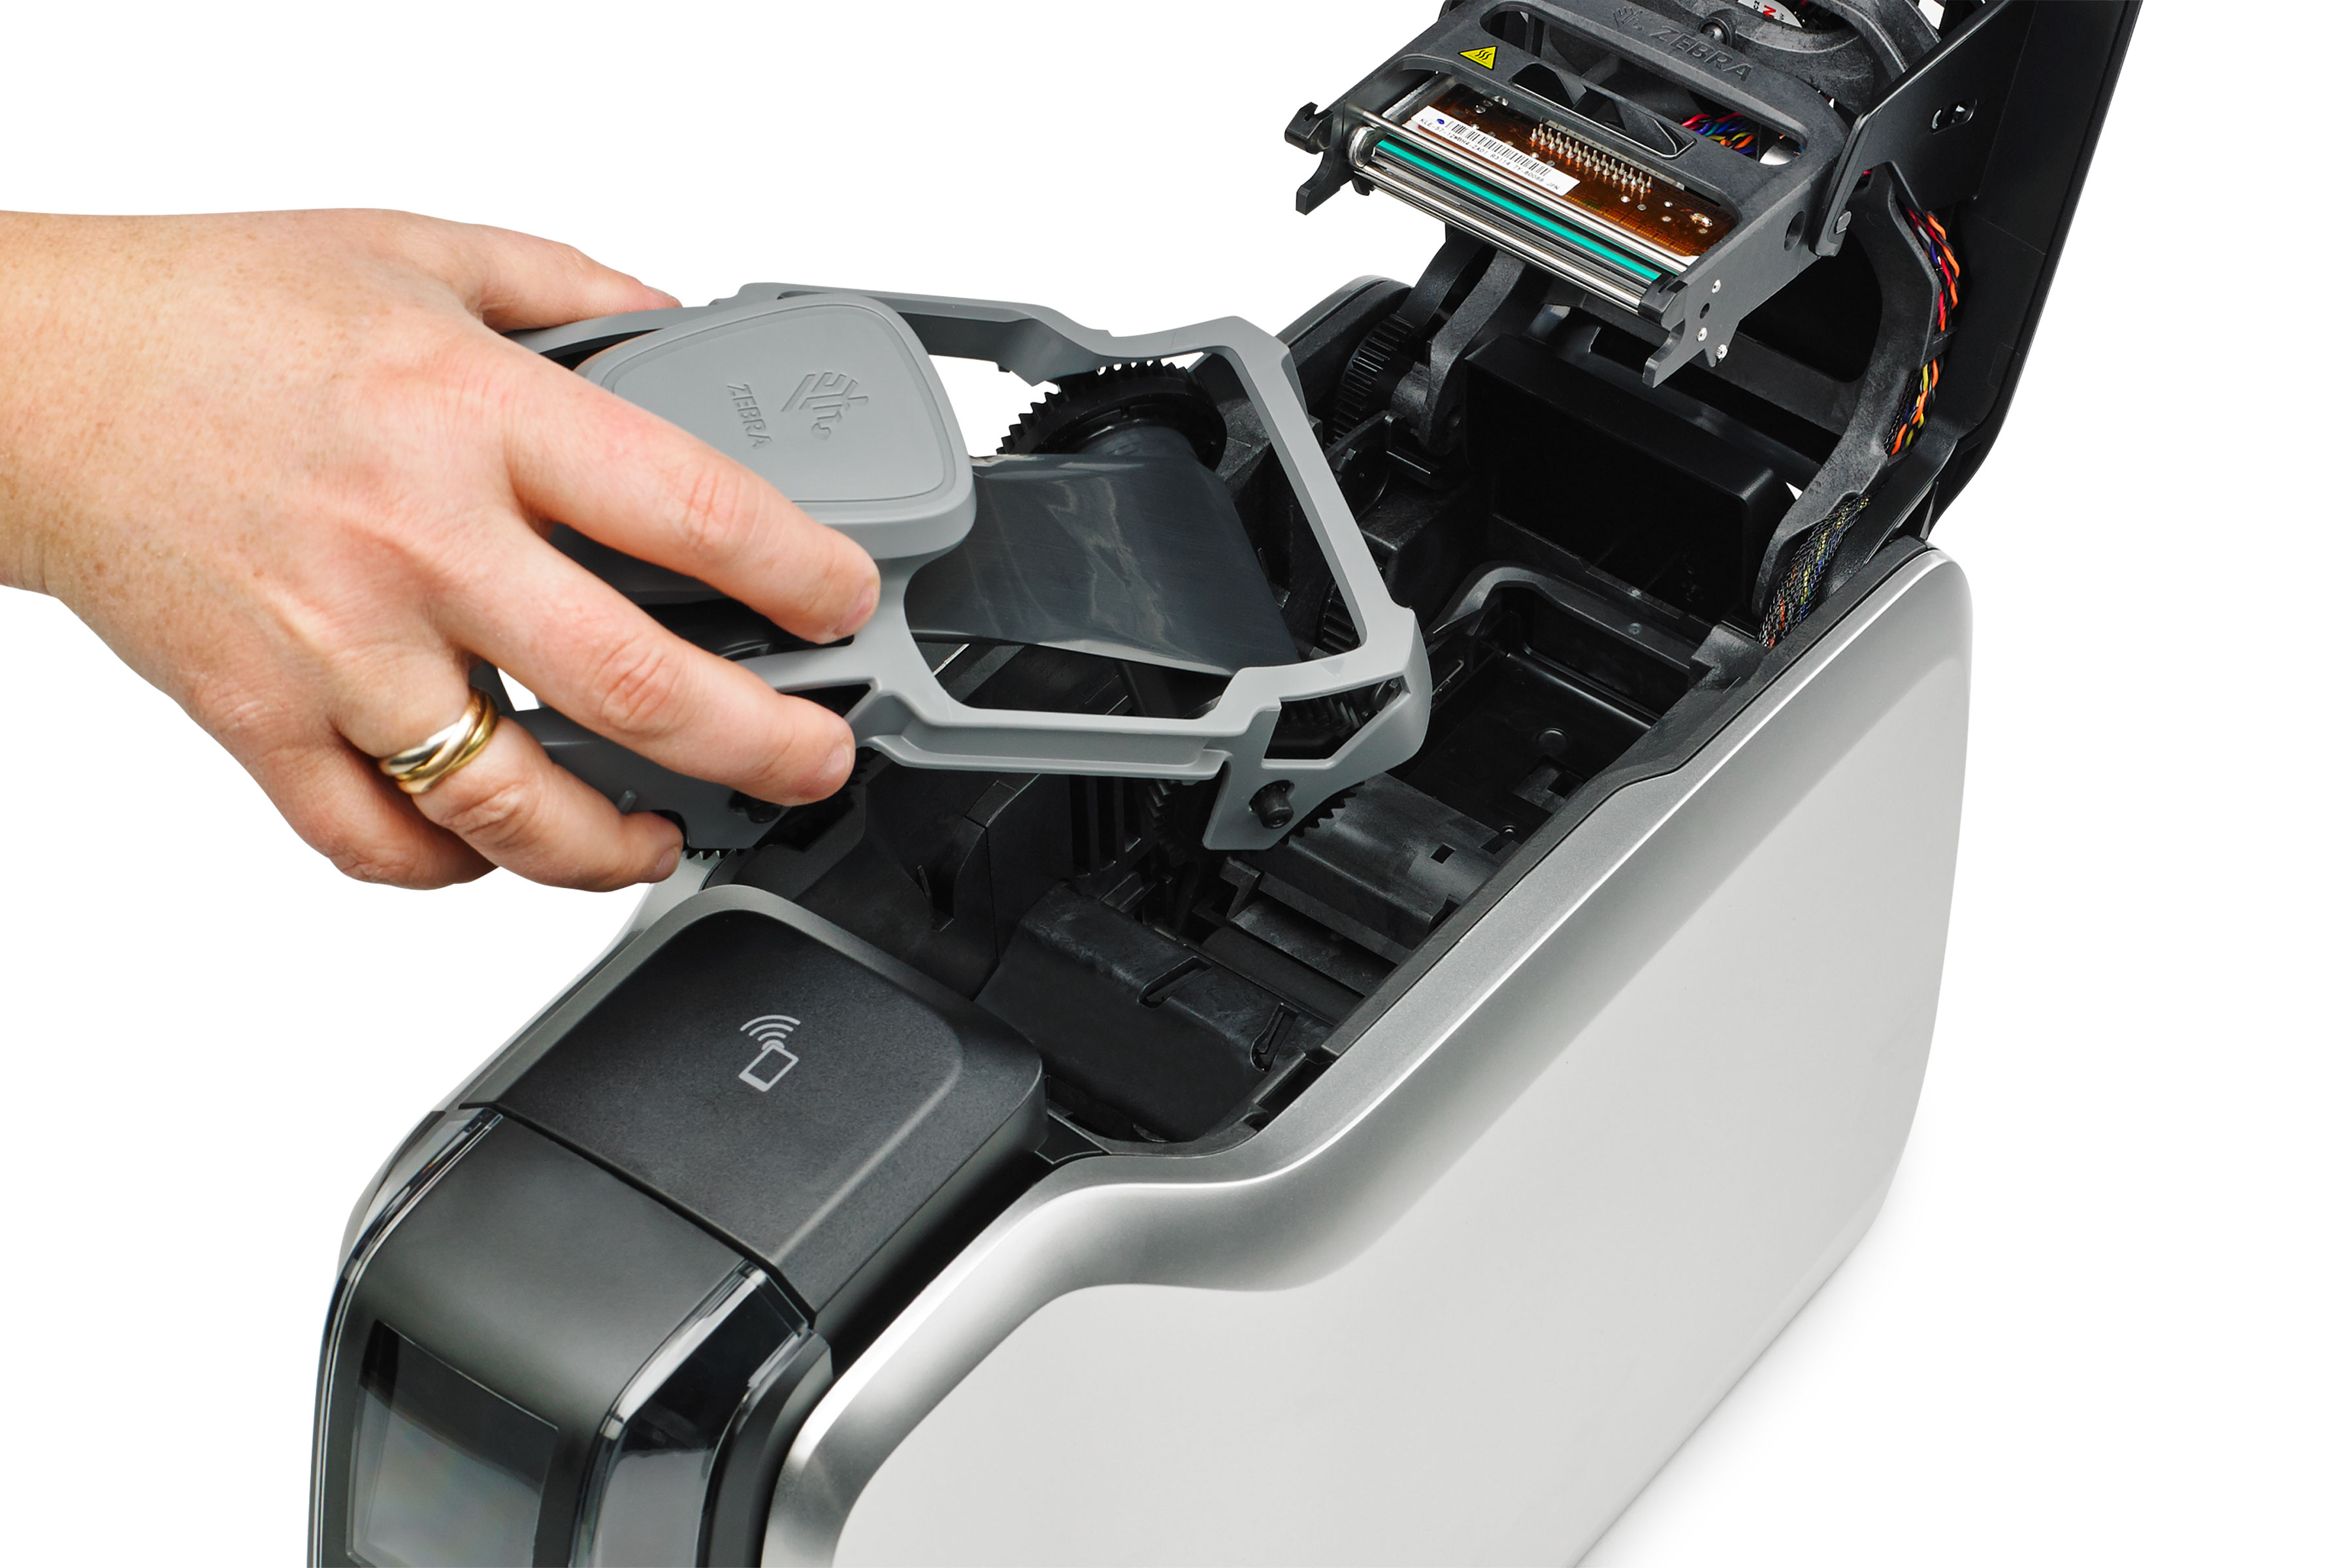 PVC Card Printer - Printers Hub